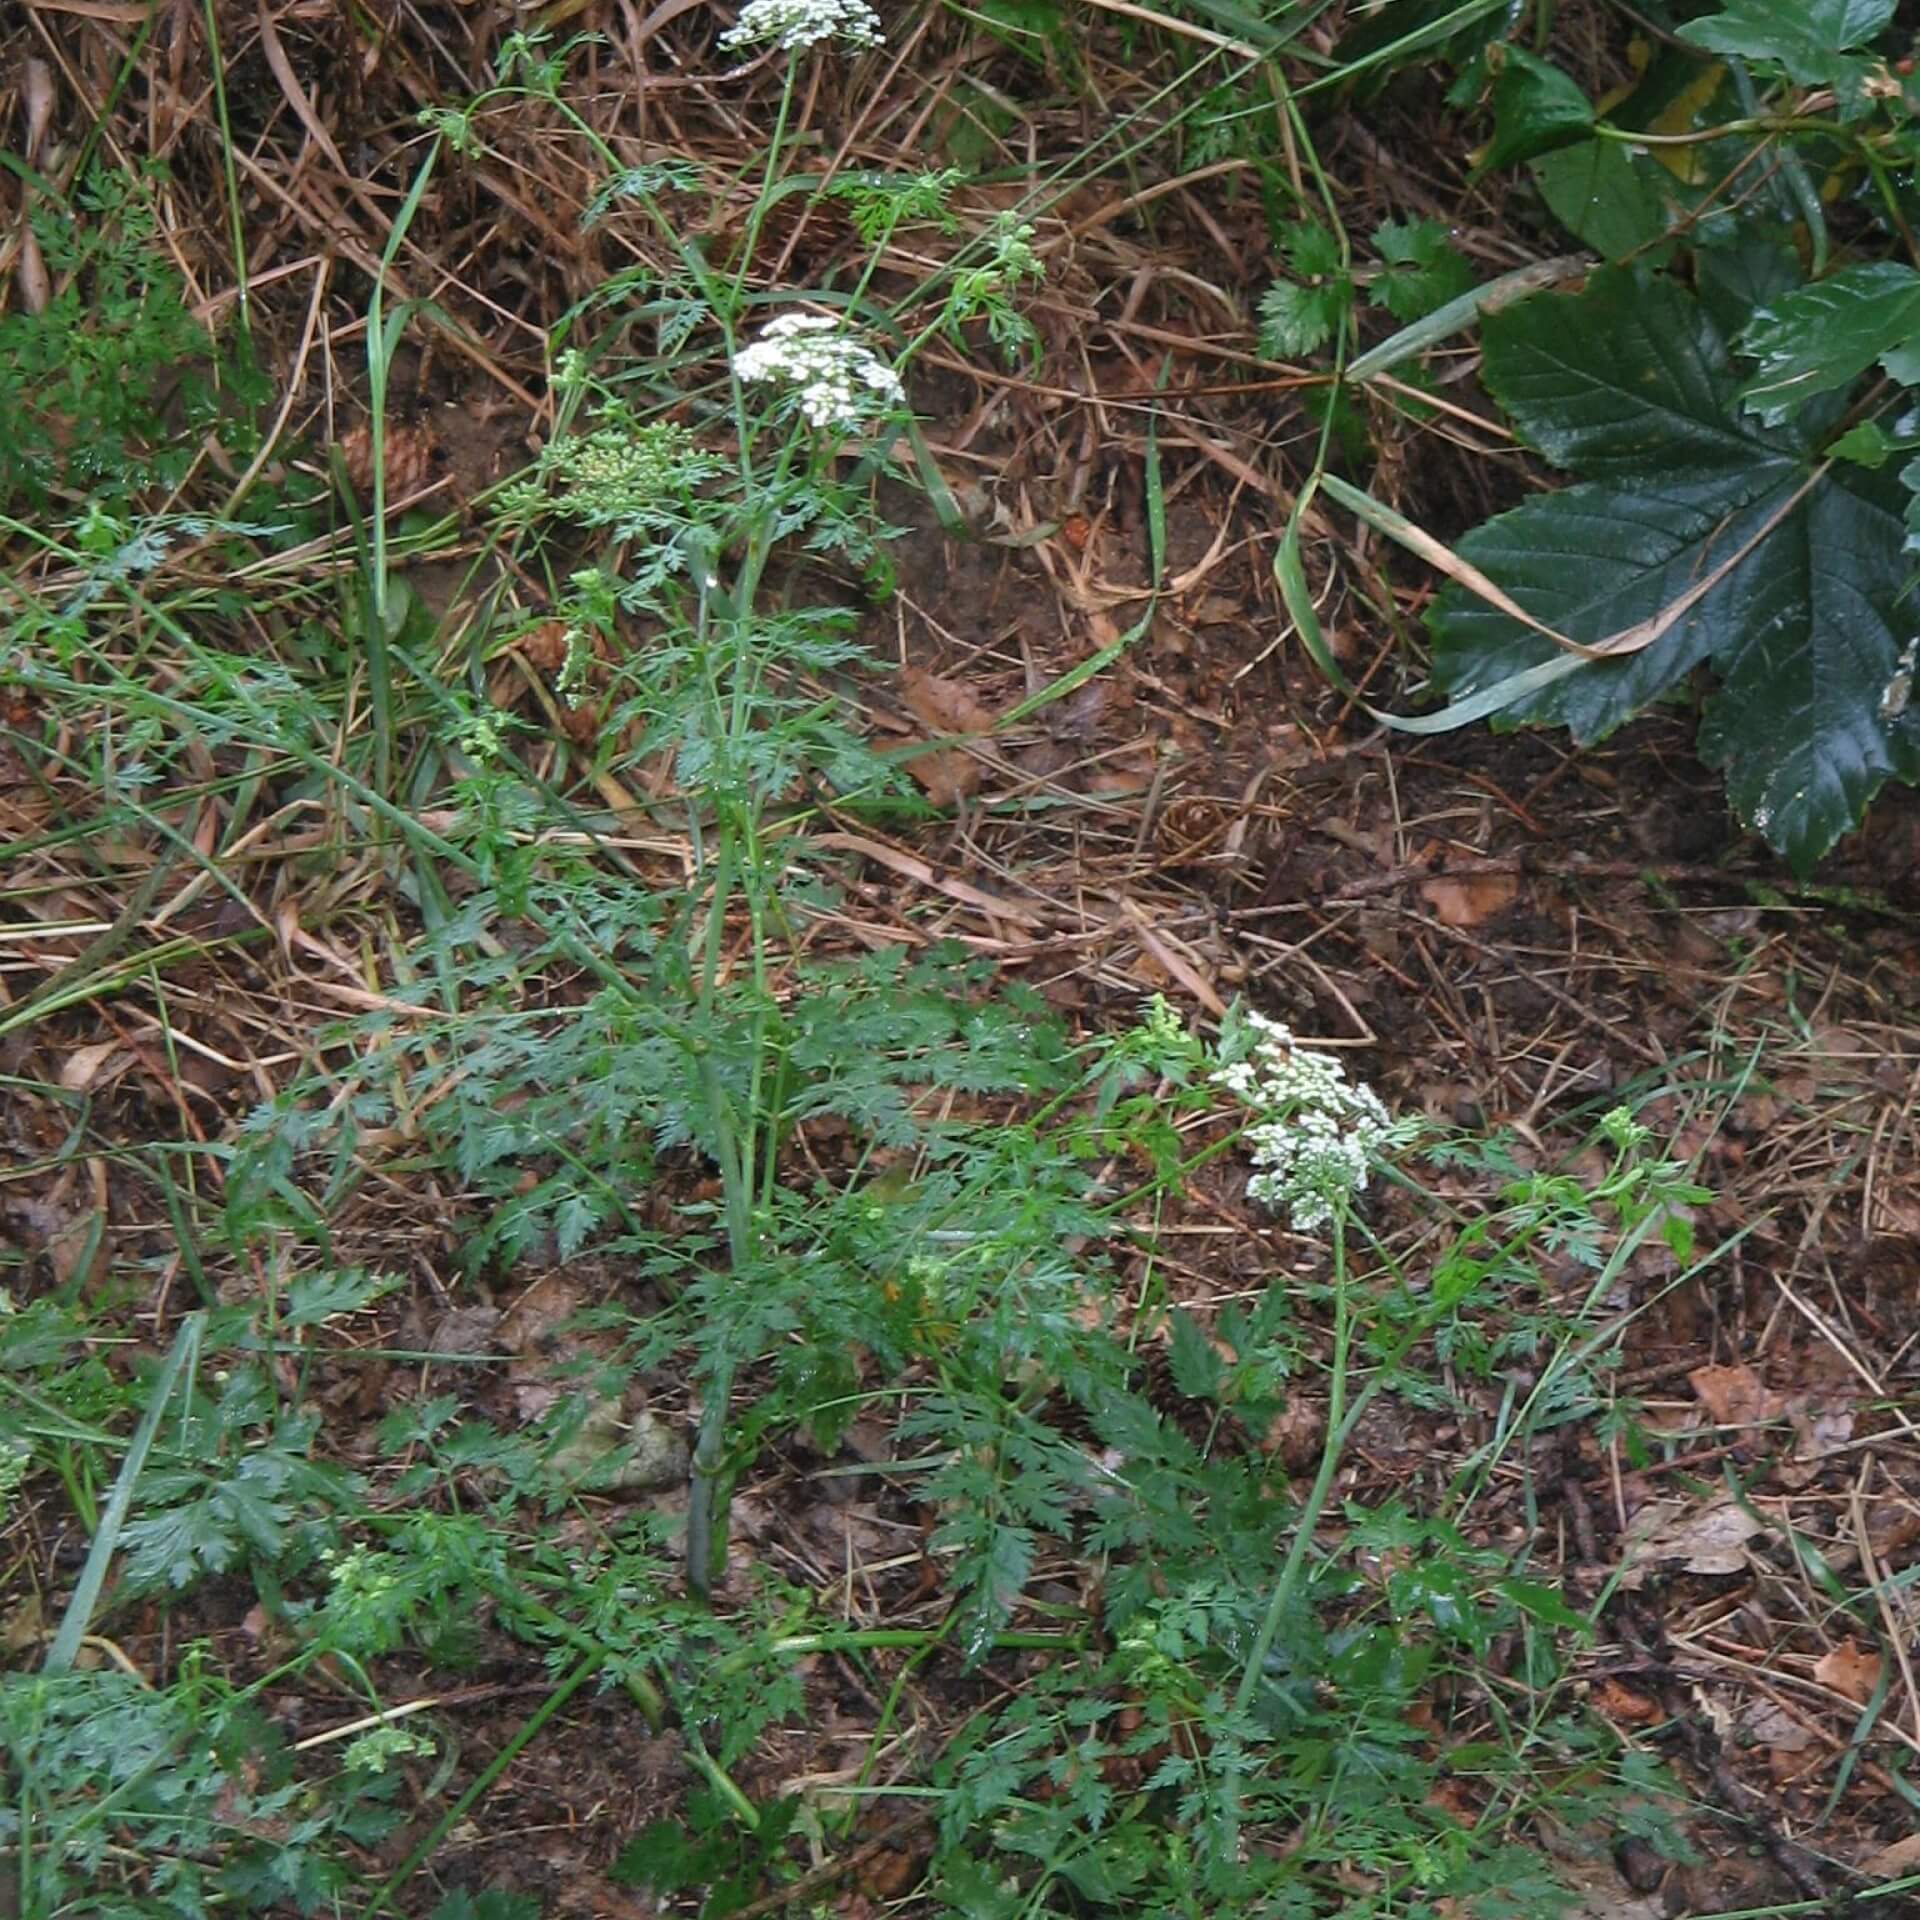 Hundspetersilie (Aethusa cynapium)